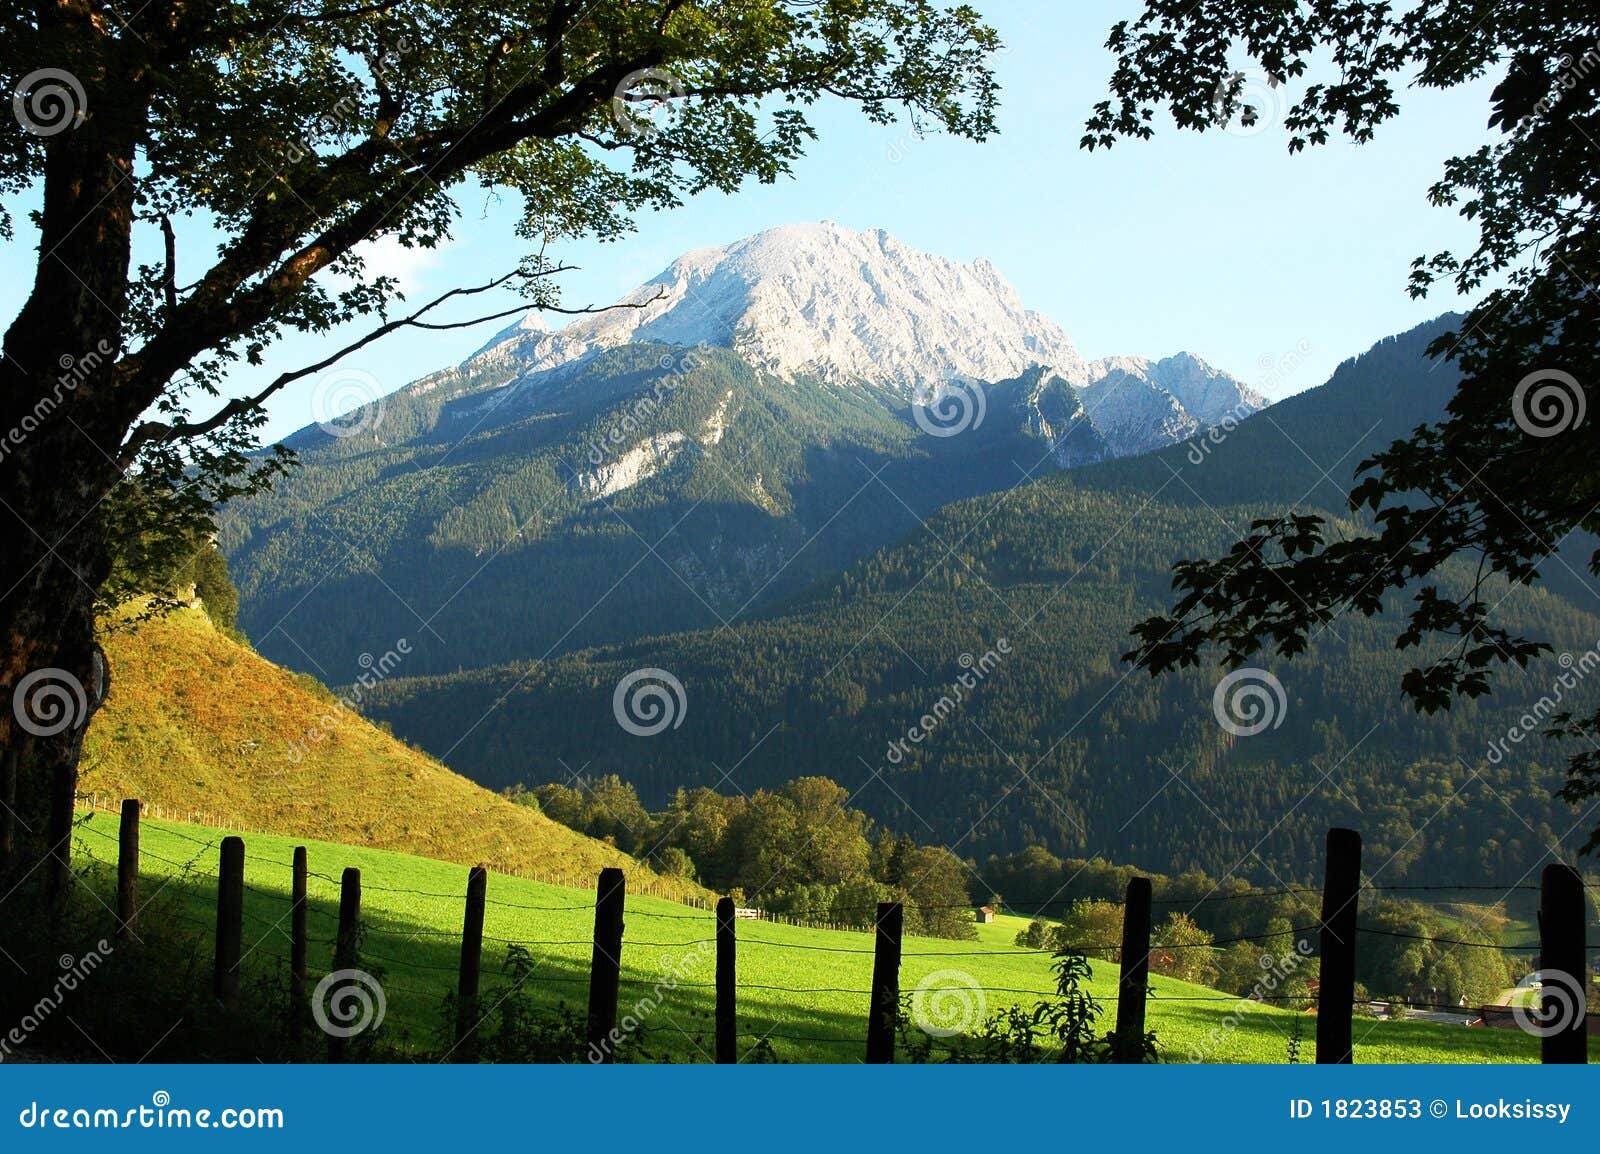 alpes mountain in summer is aloso beautiful